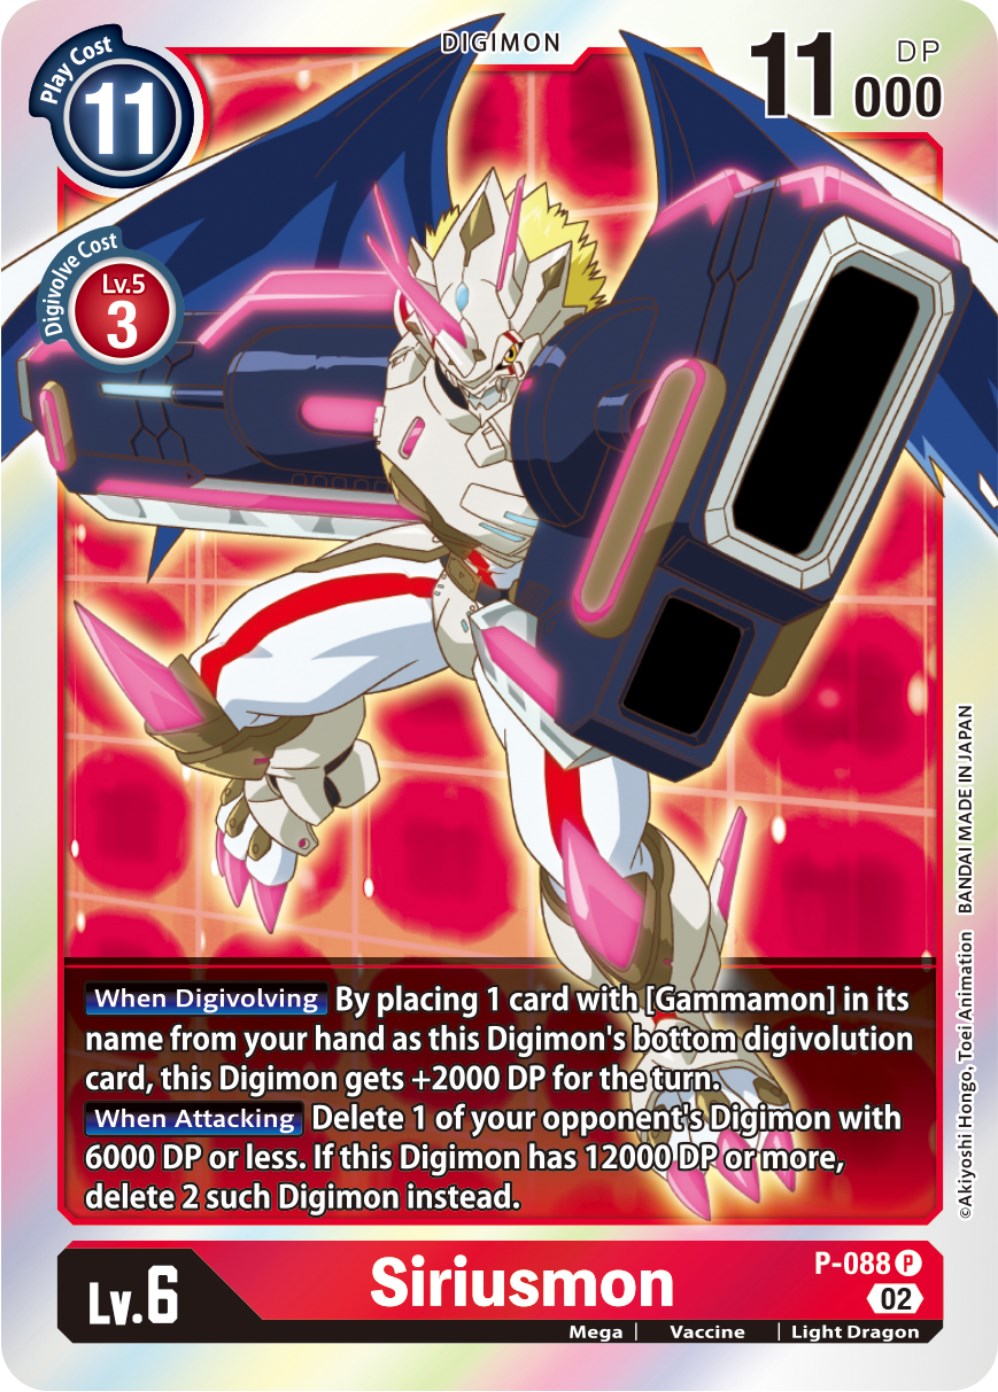 Siriusmon - P-088 [P-088] [Digimon Promotion Cards] Foil